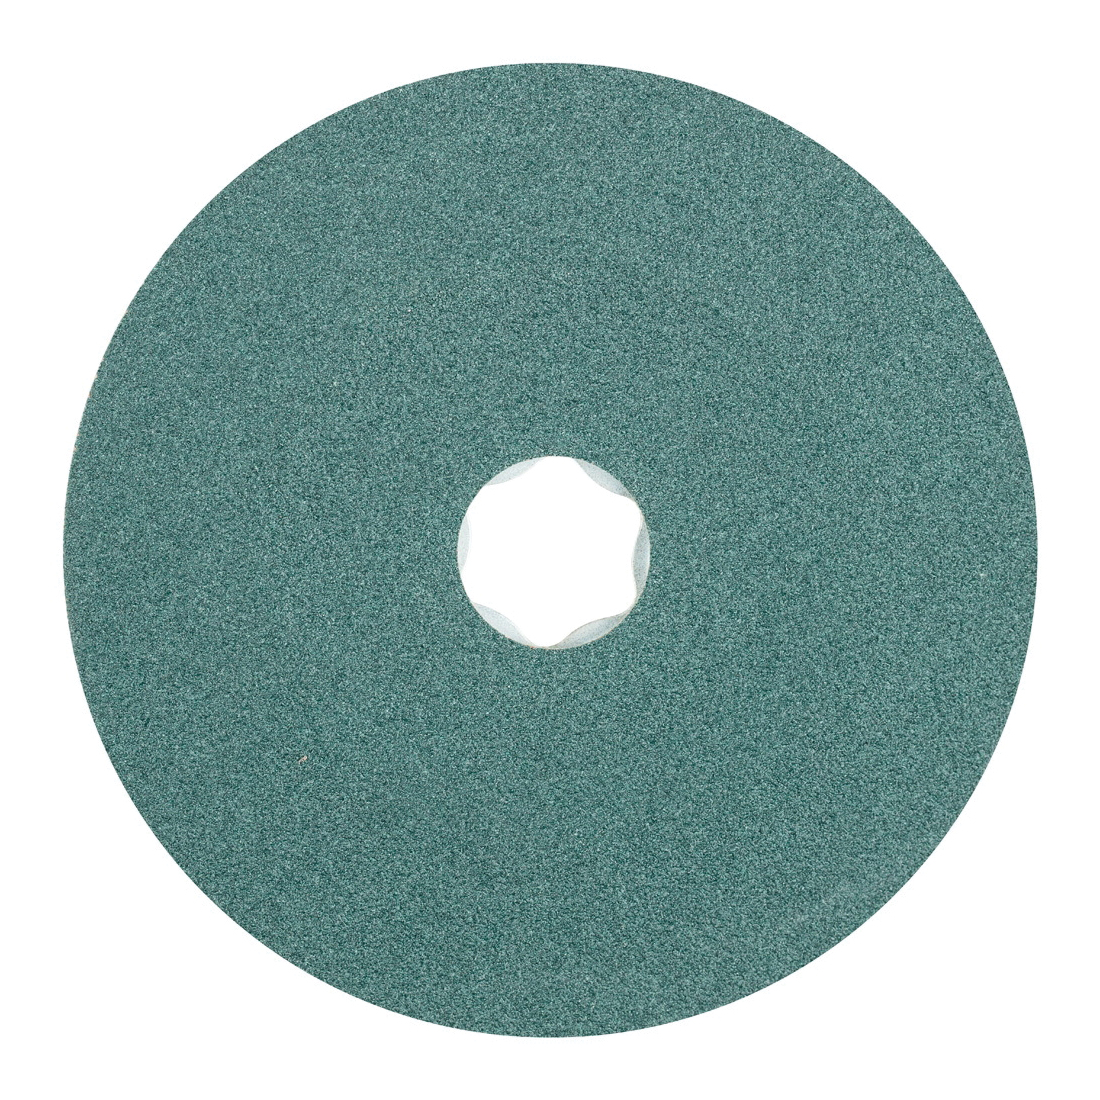 PFERD COMBICLICK® 40134 Coated Abrasive Disc, 4-1/2 in Dia, 80 Grit, Zirconia Alumina Abrasive